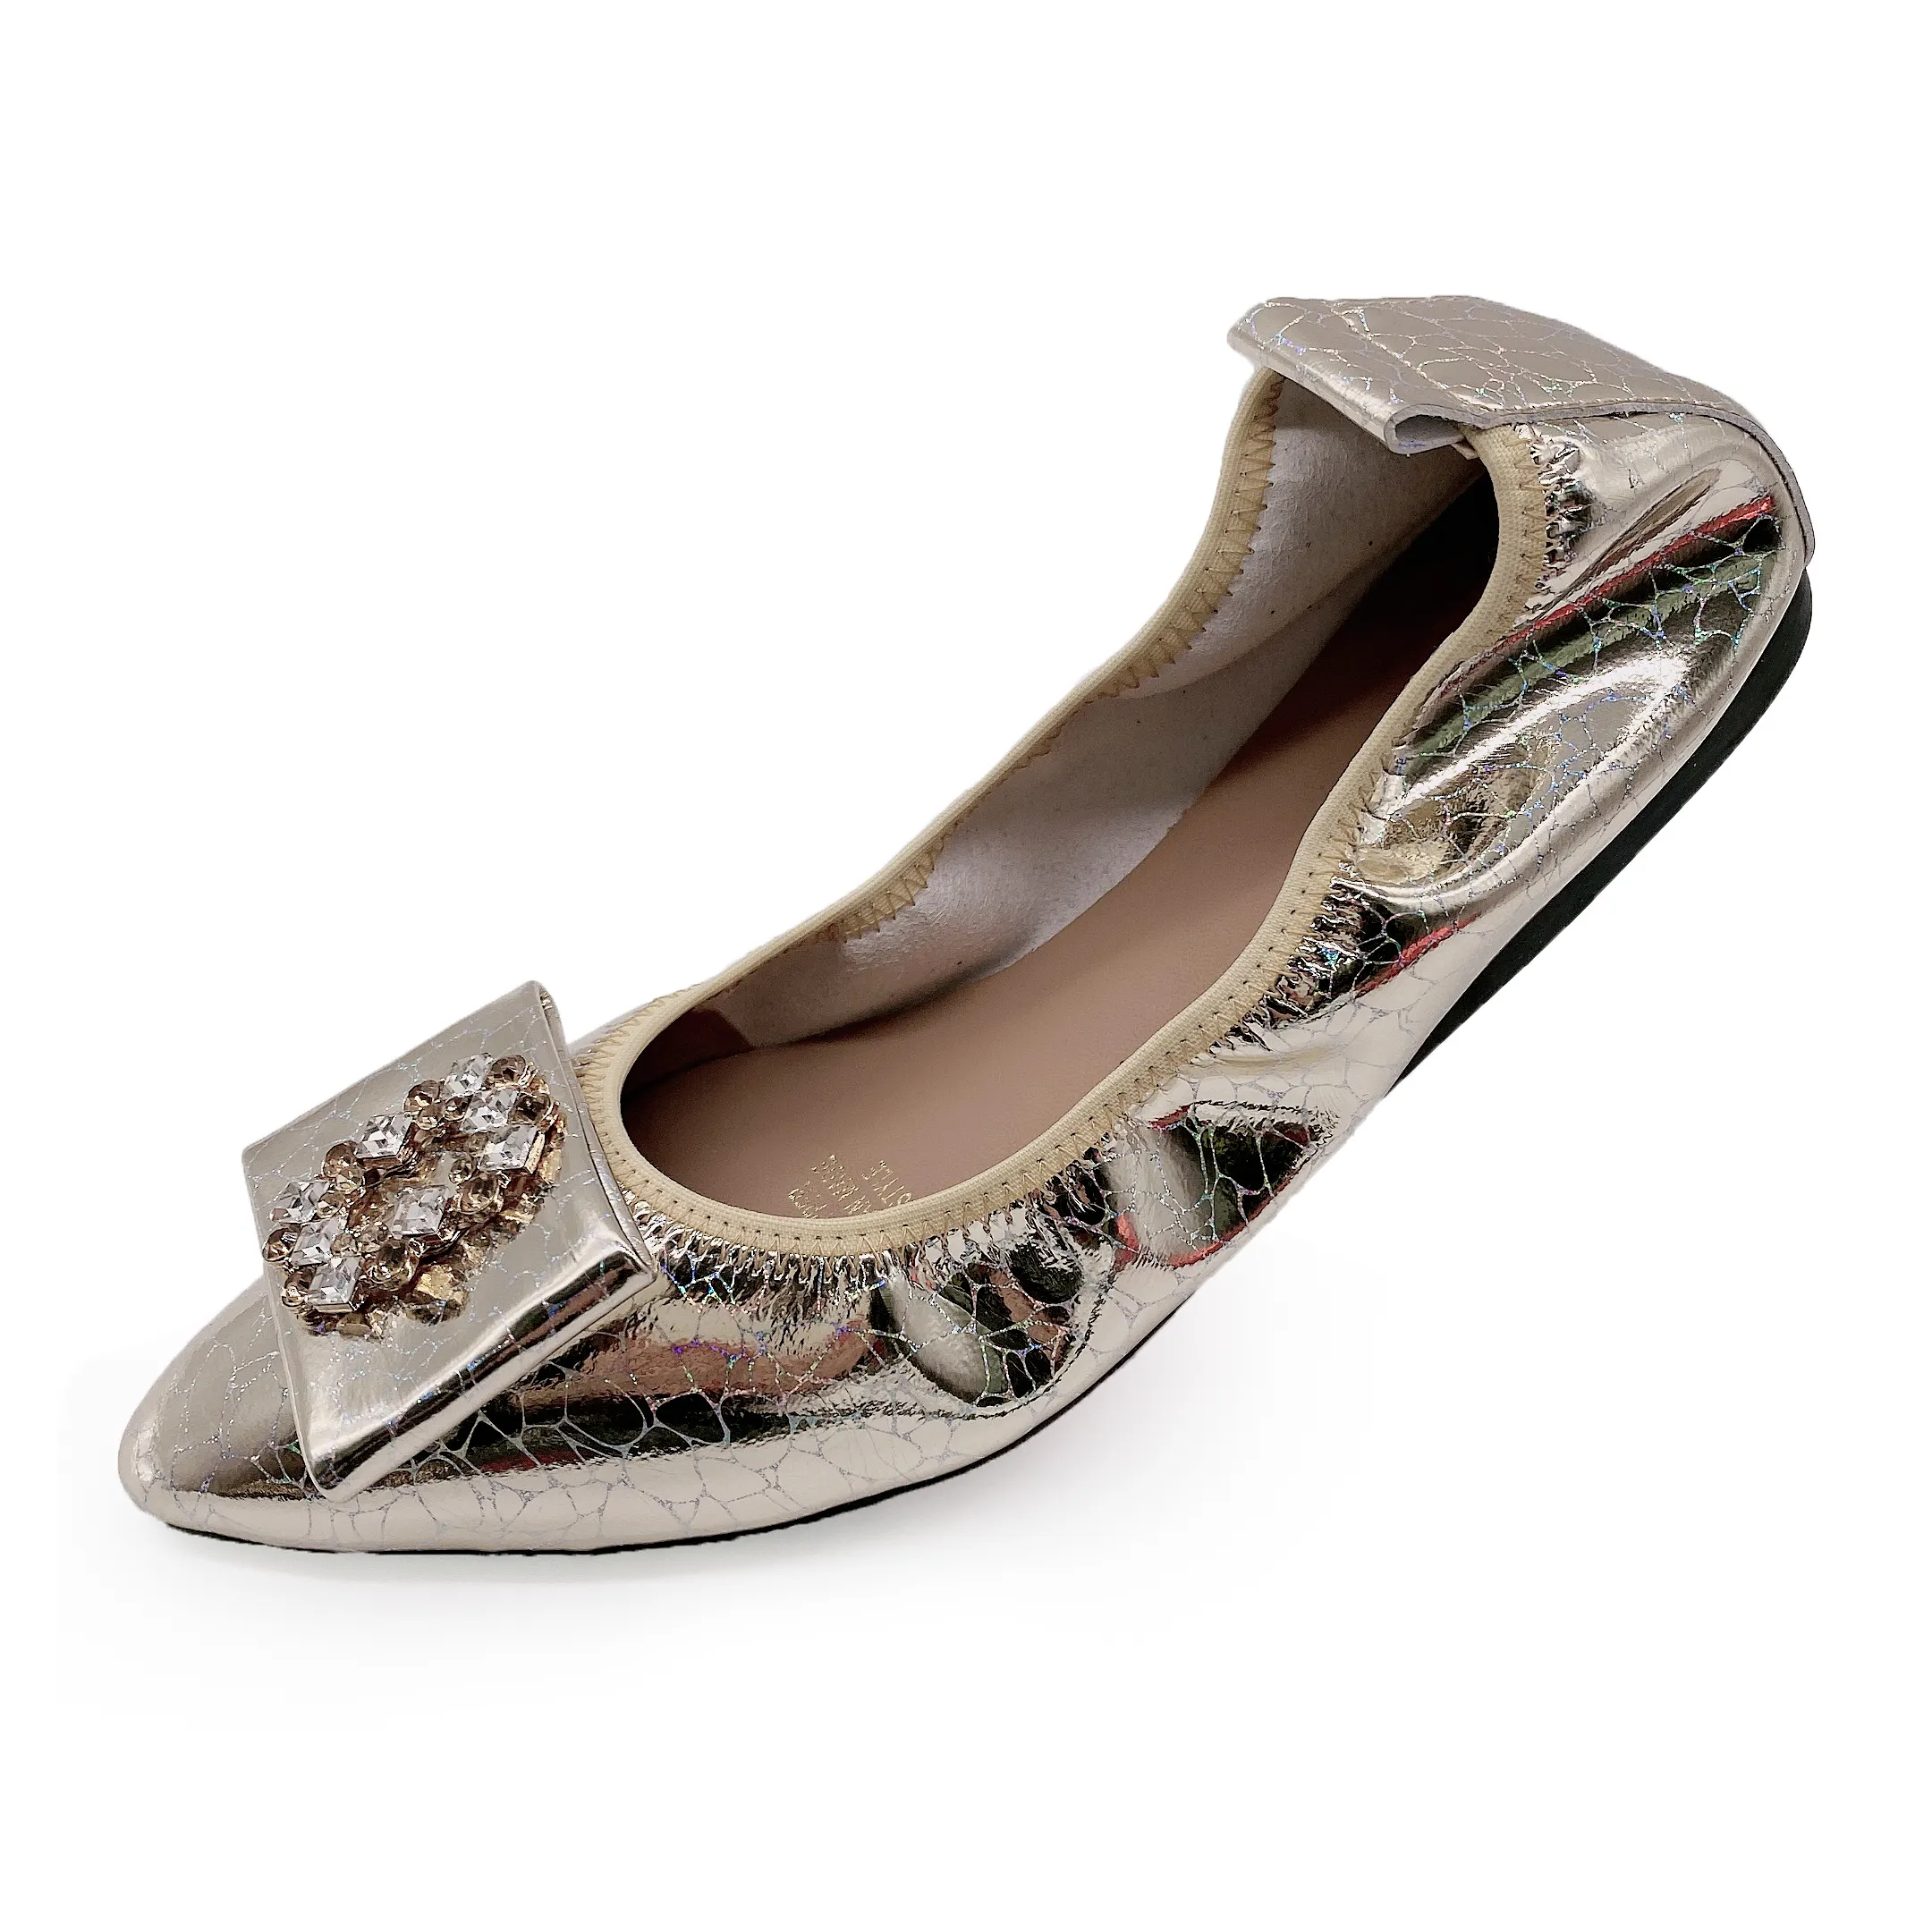 ODM 167-1 Rhinestone Pointed Toe Fashion Ballet Flats Women Shoes Confort Flats Ladies